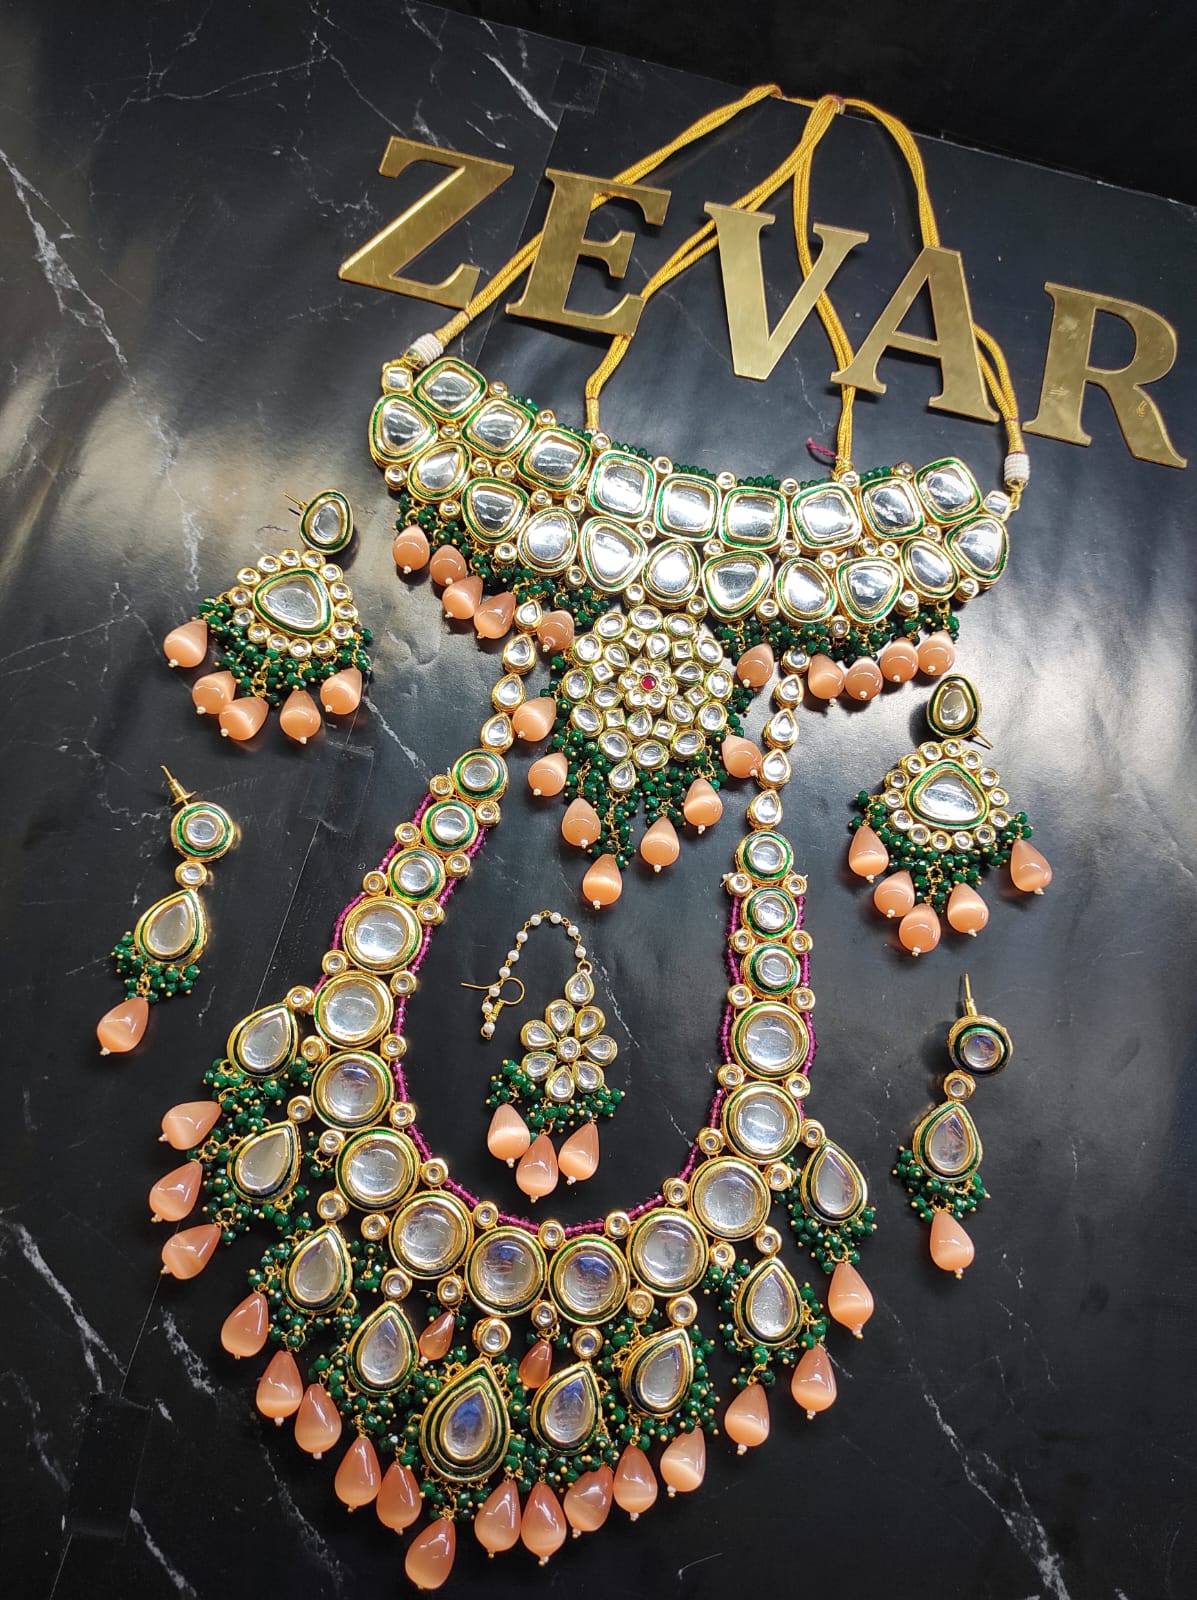 Zevar Jewelry Traditional Kundan Bridal Jewellery Necklace set By Zevar